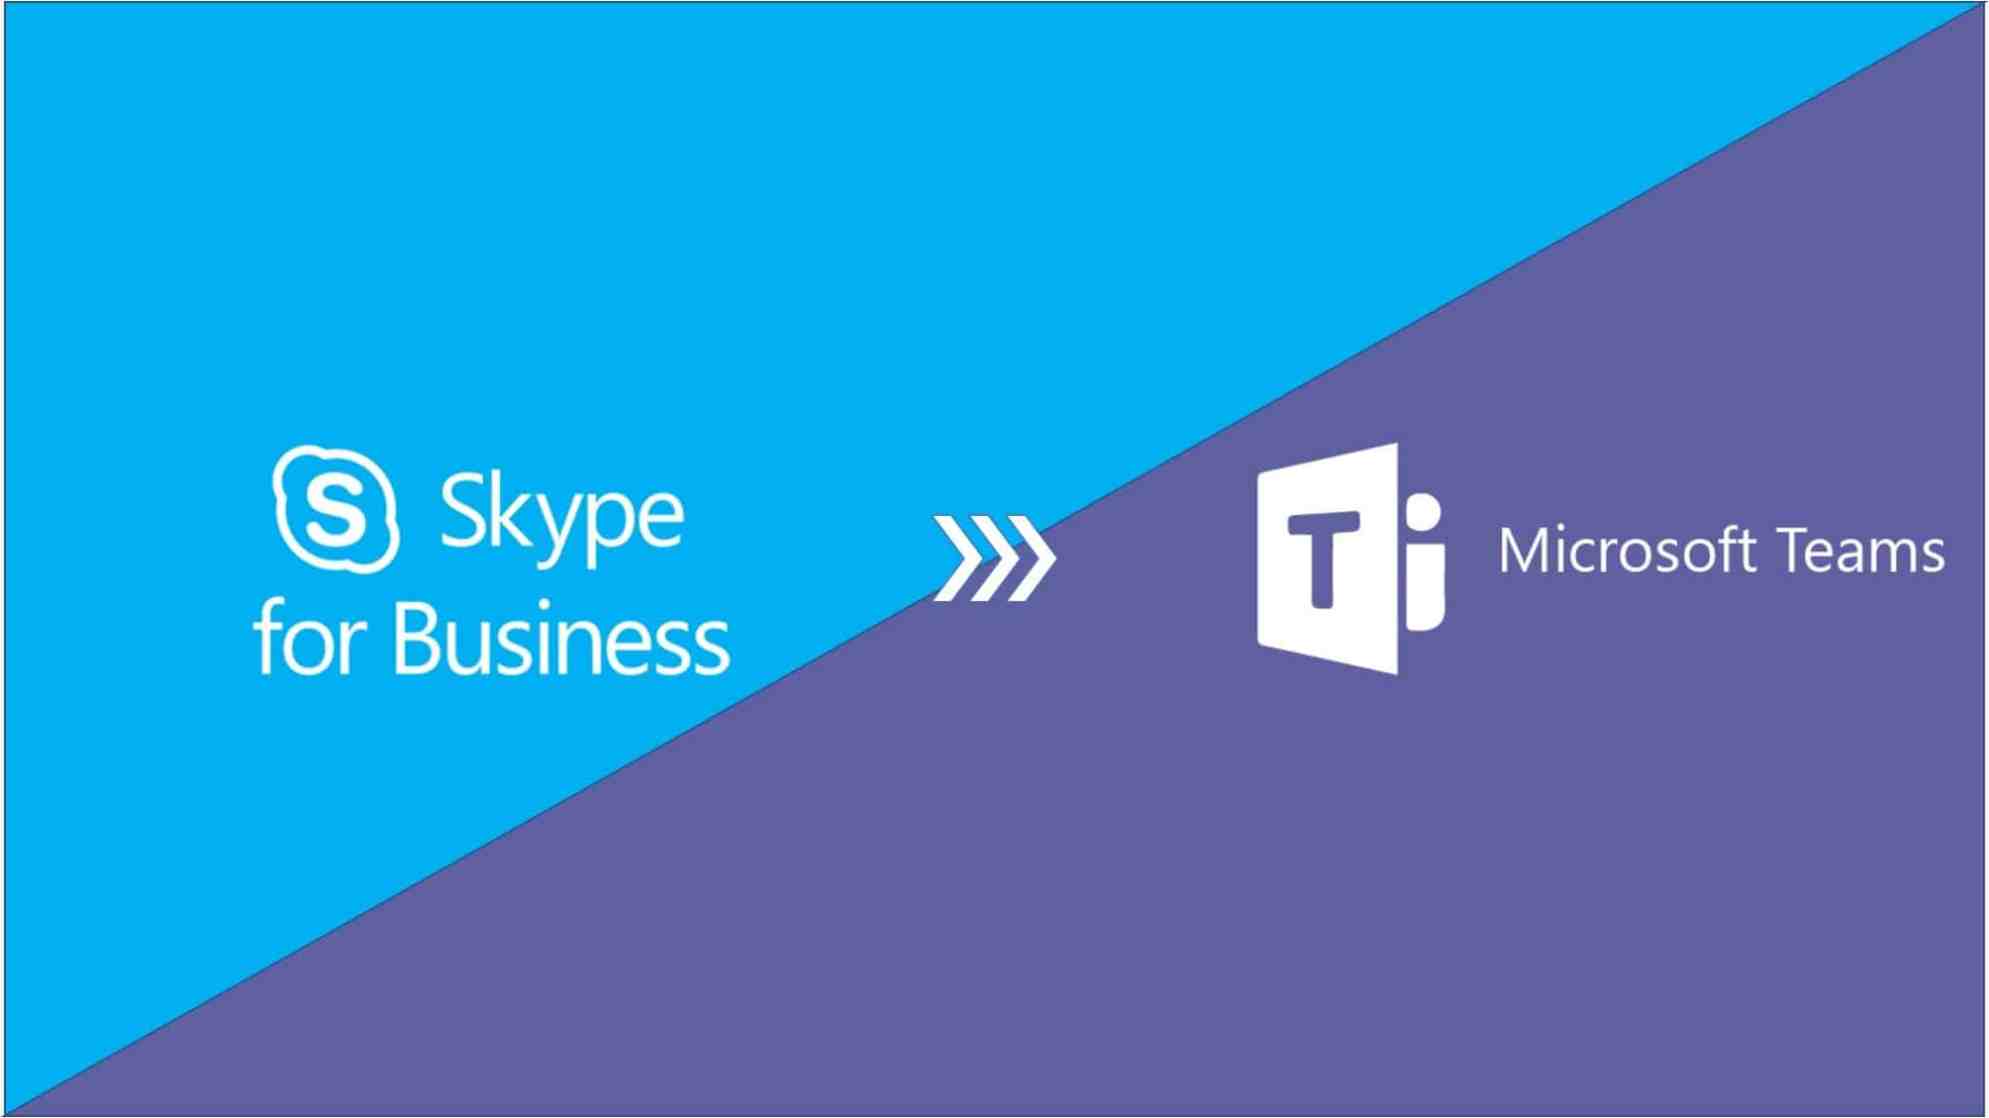 skype for business online (plan 2) download